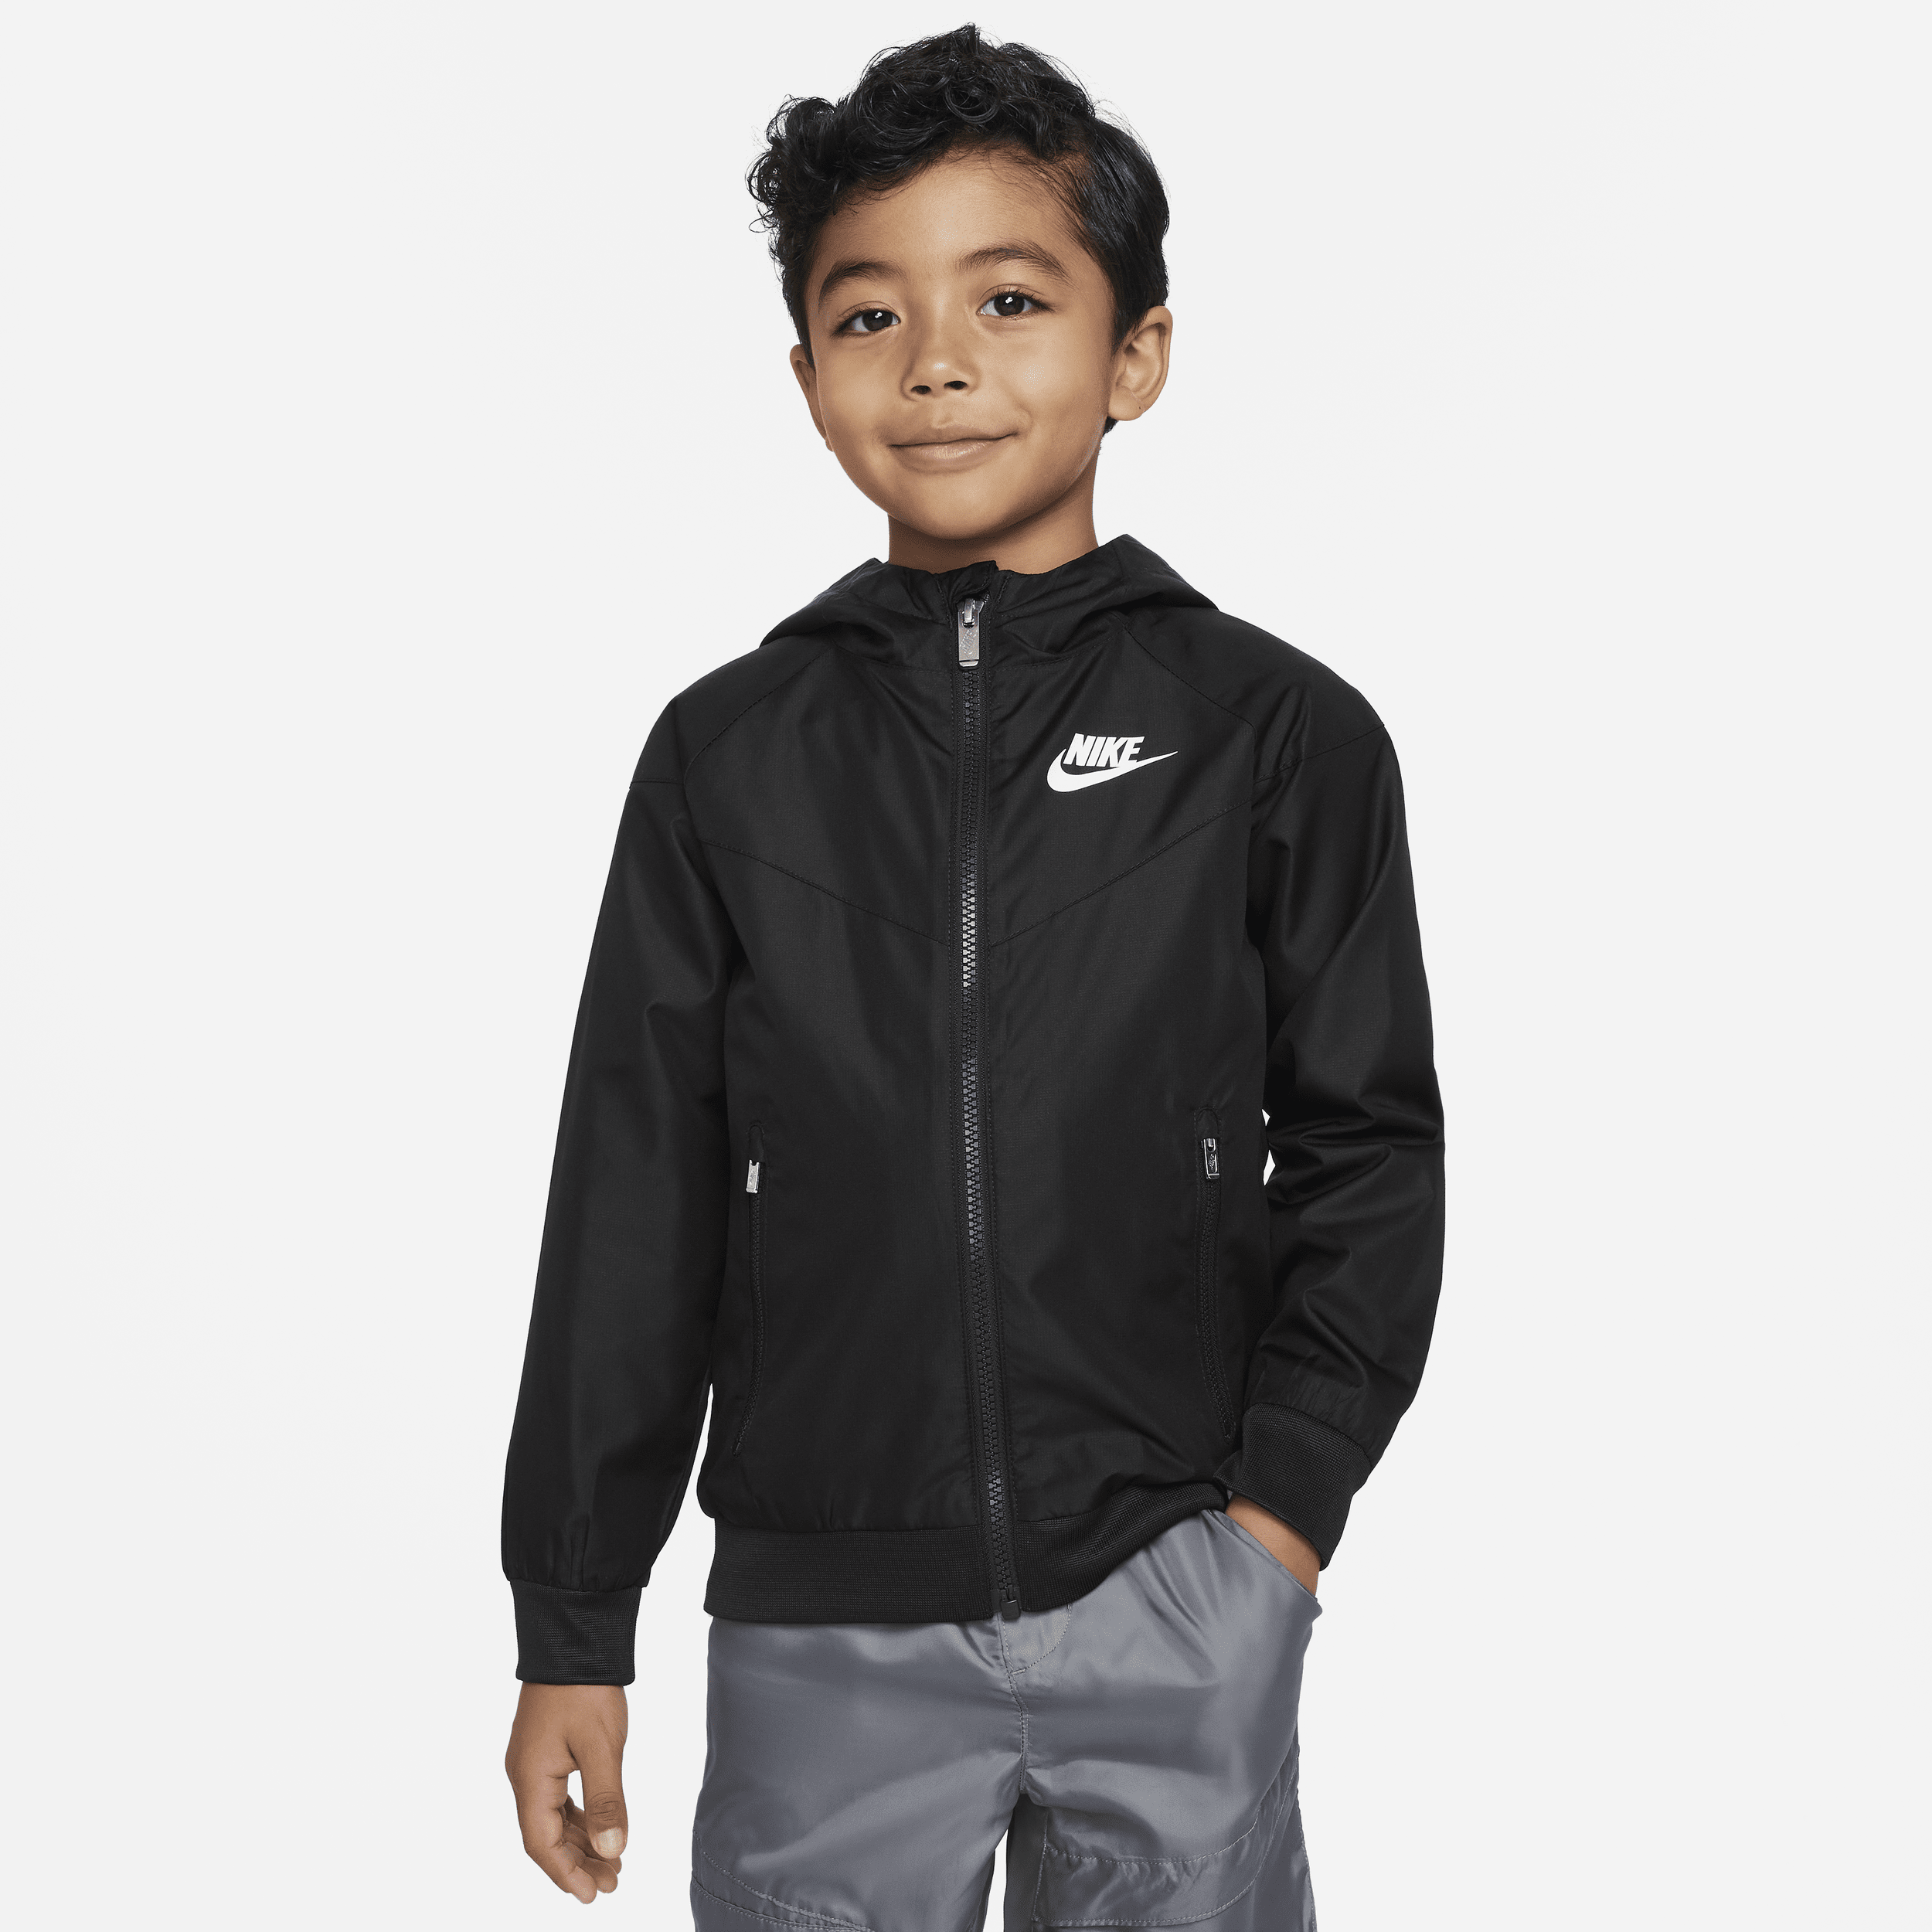 Giacca con zip a tutta lunghezza Nike Sportswear Windrunner – Bambino/a - Nero